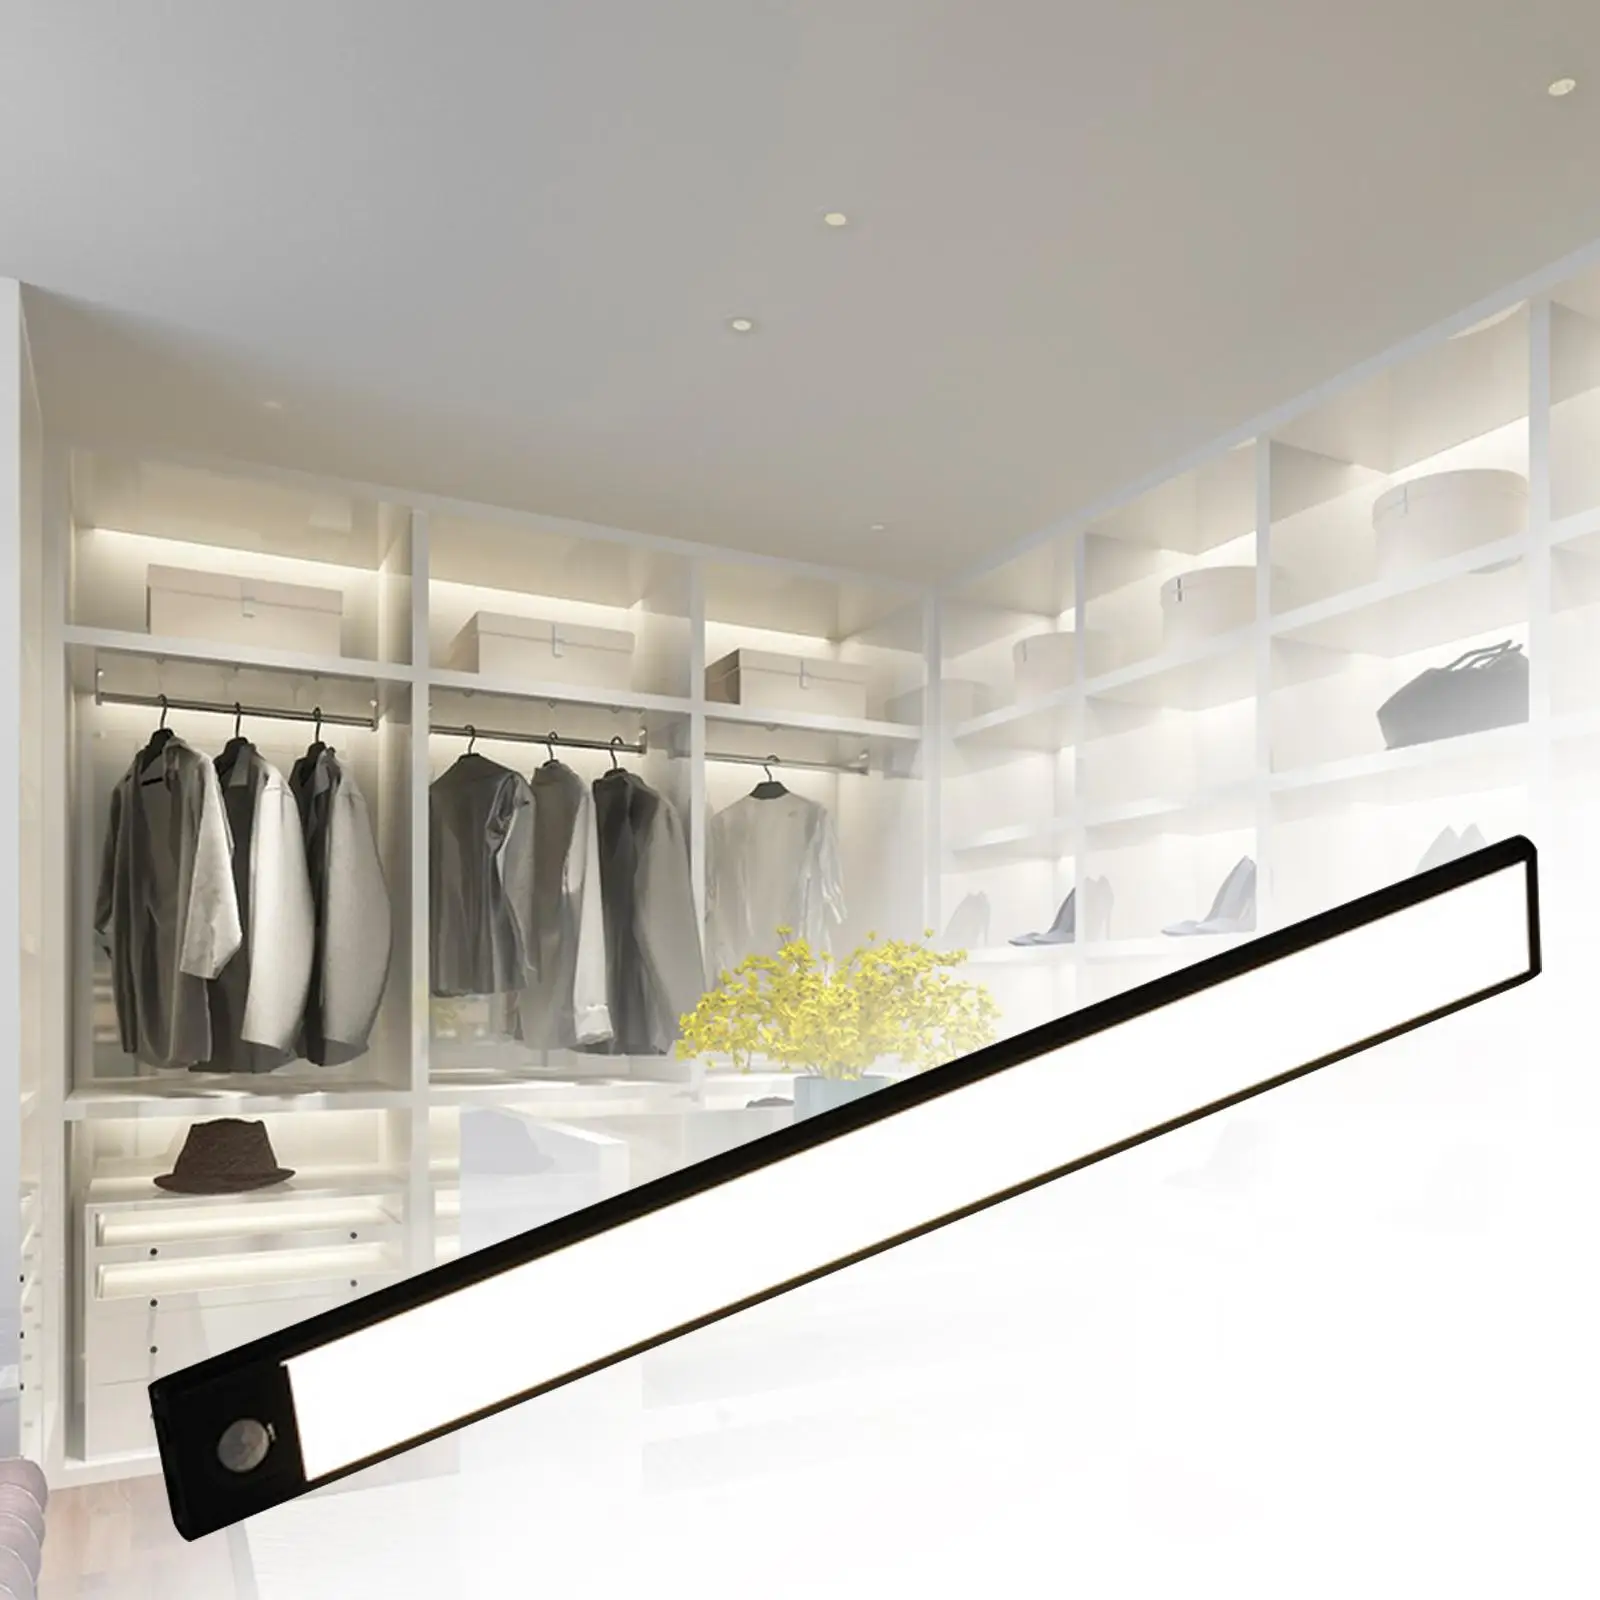 Motion Sensor Light Bar 1500mAh Rechargeable Comfortable Night Lighting for Corridors Wardrobe Hotel Rooms Workshops Bedrooms